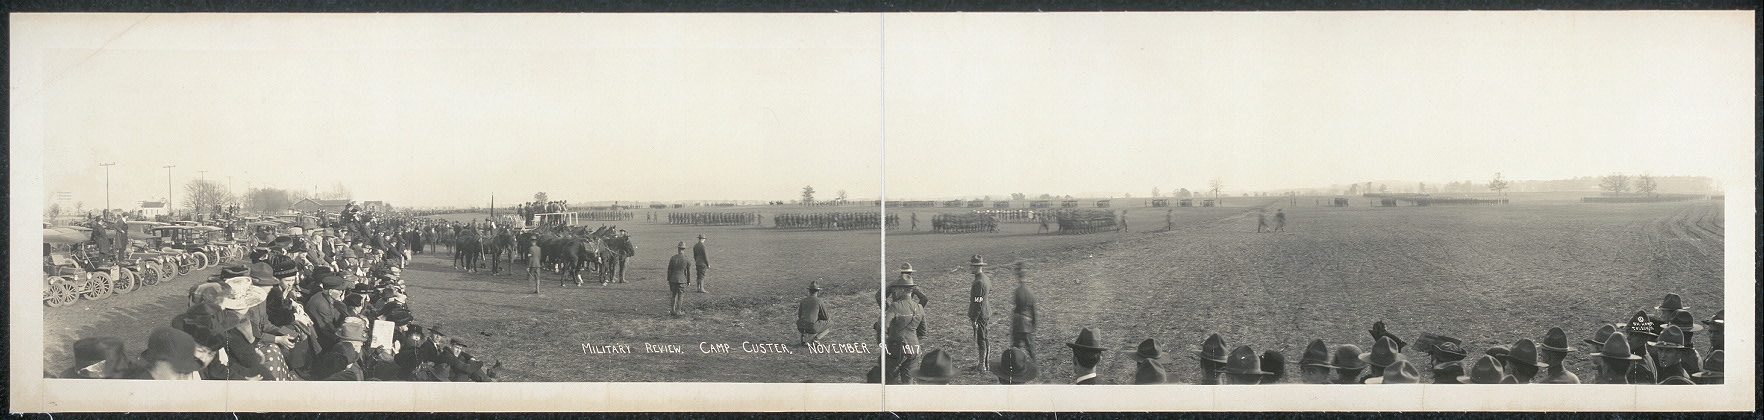 Military review, Camp Custer, November 9, 1917